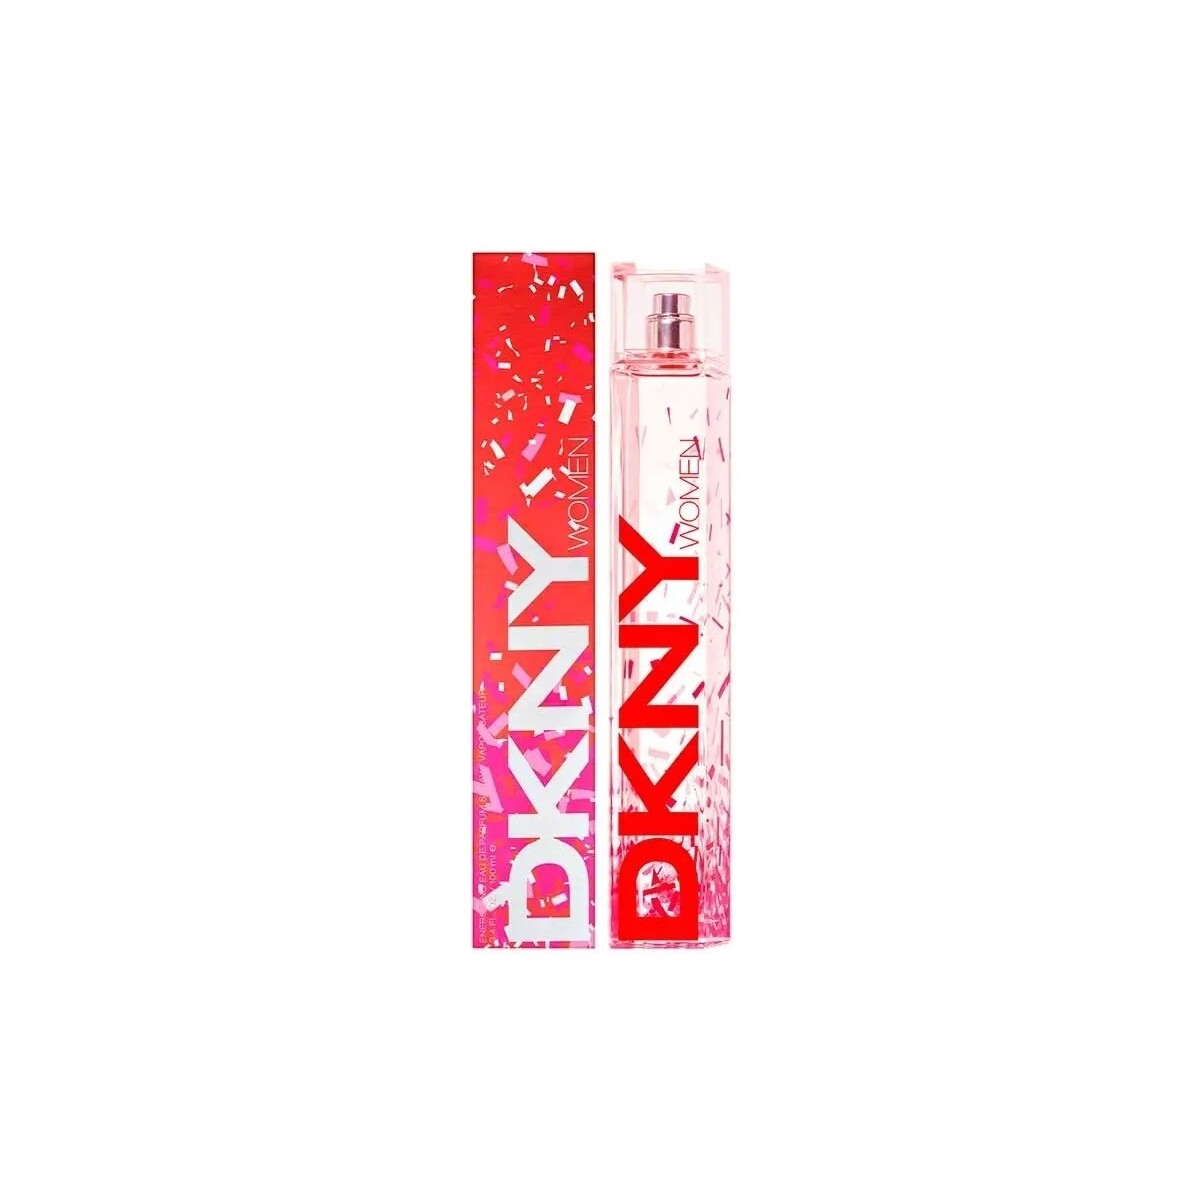 beleza Mulher Eau de parfum  Dkny Women perfume 100ml - Limited Edition DKNY Women perfume 100ml - Limited Edition